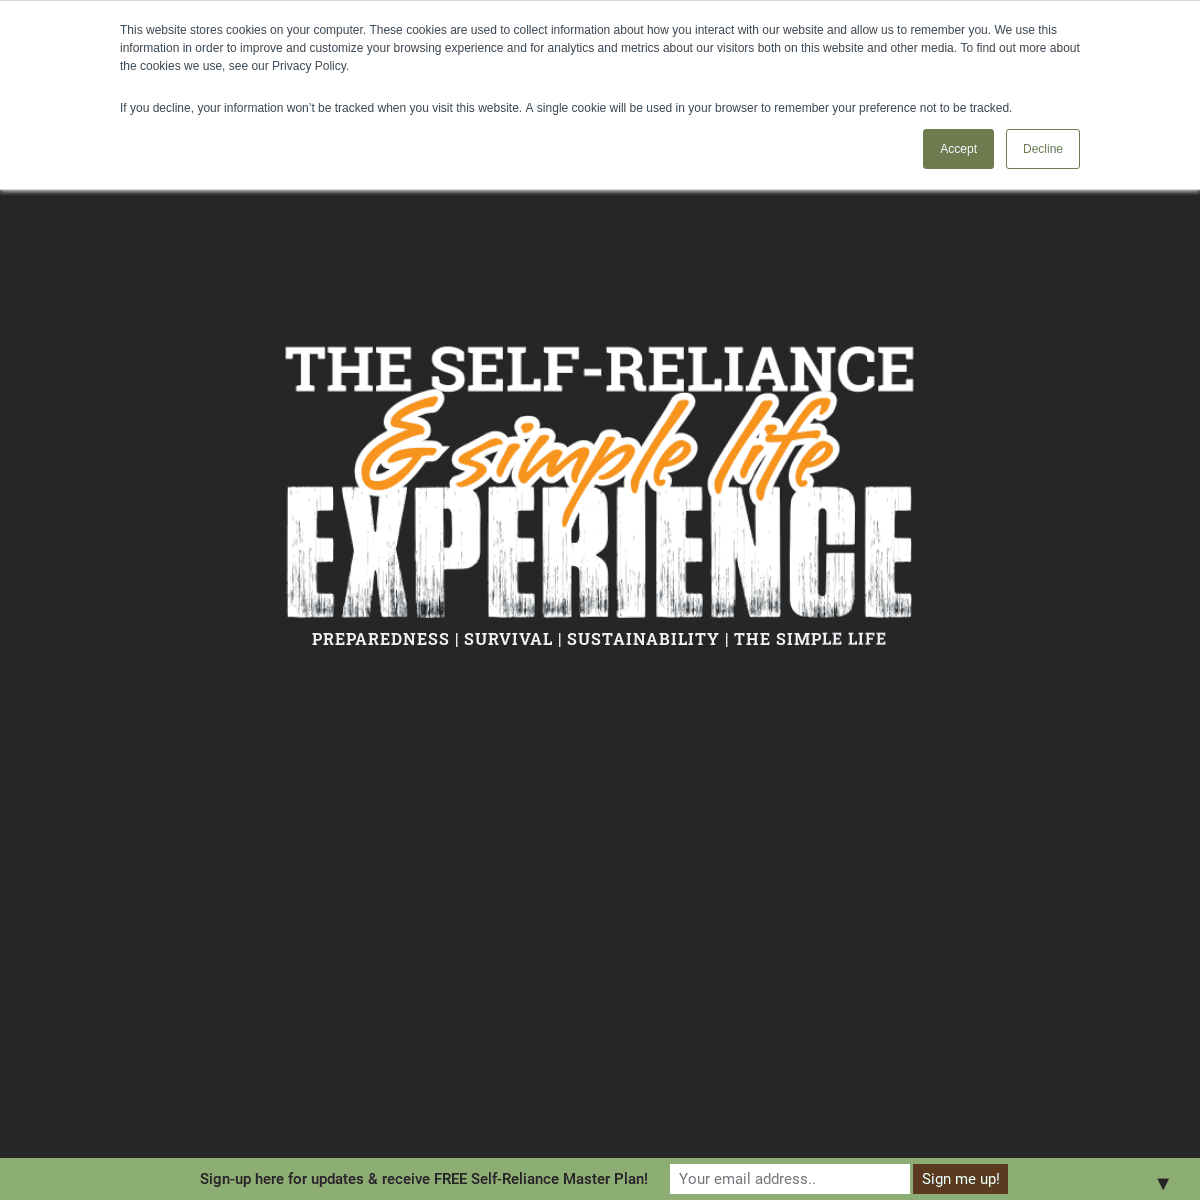 A complete backup of selfrelianceexpo.com